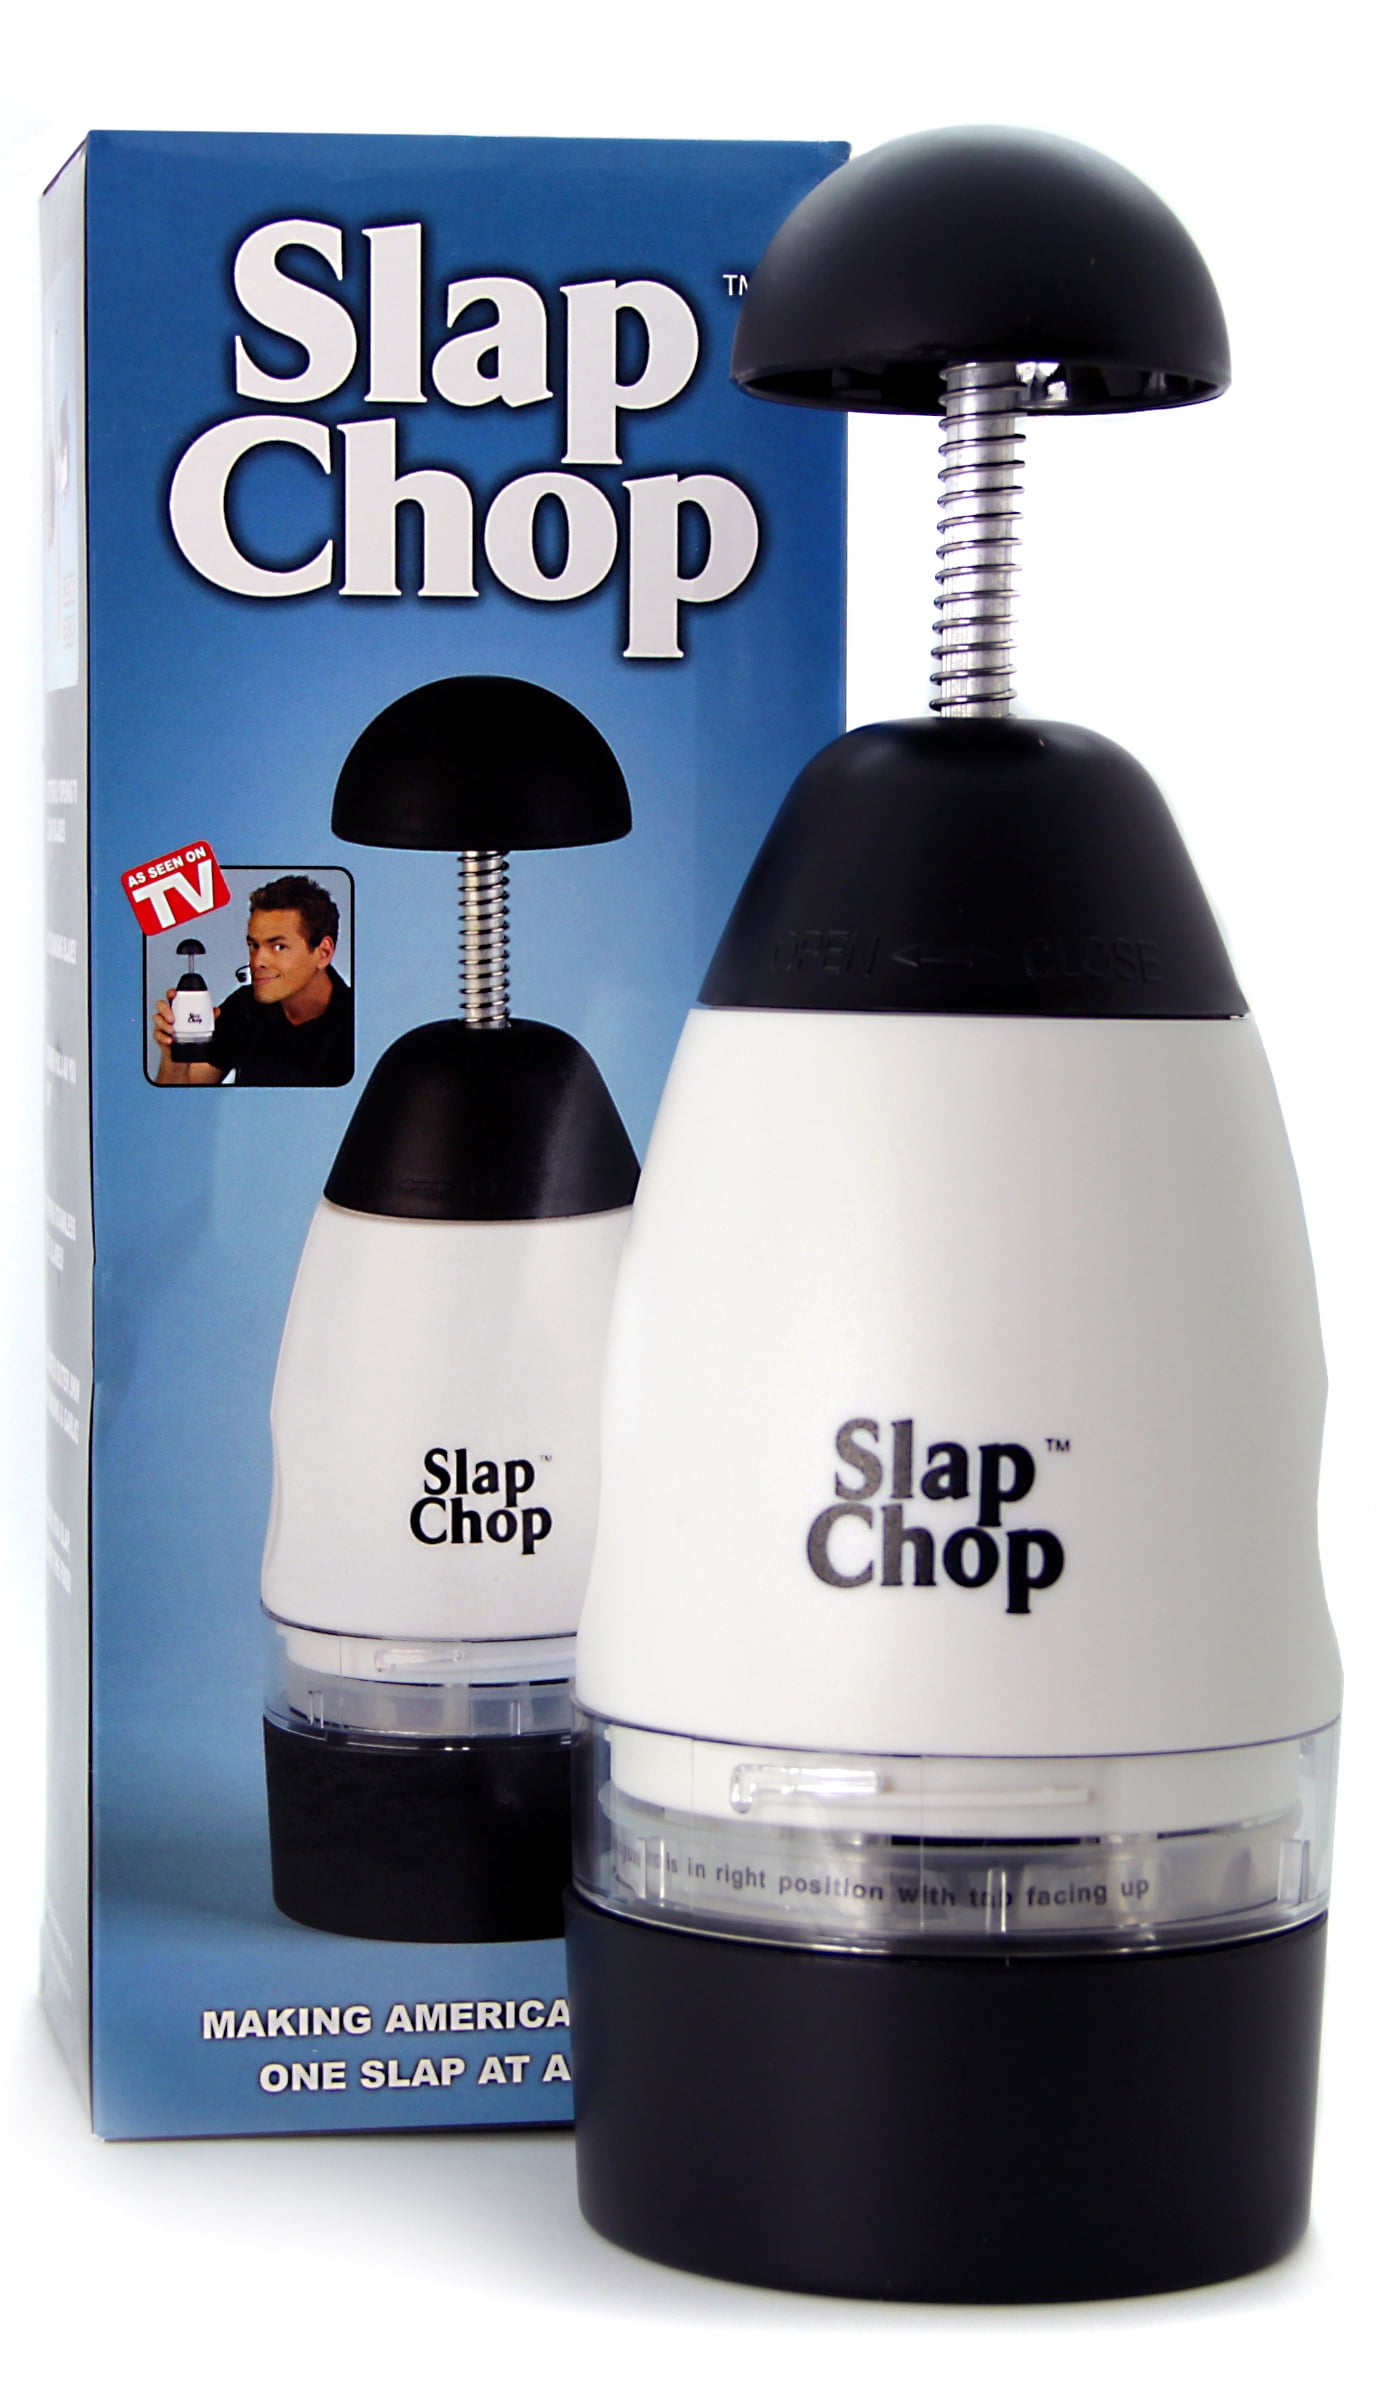 Chop-O-Matic (1956) vs Slap Chop (2009) vs OXO Food Chopper (2019